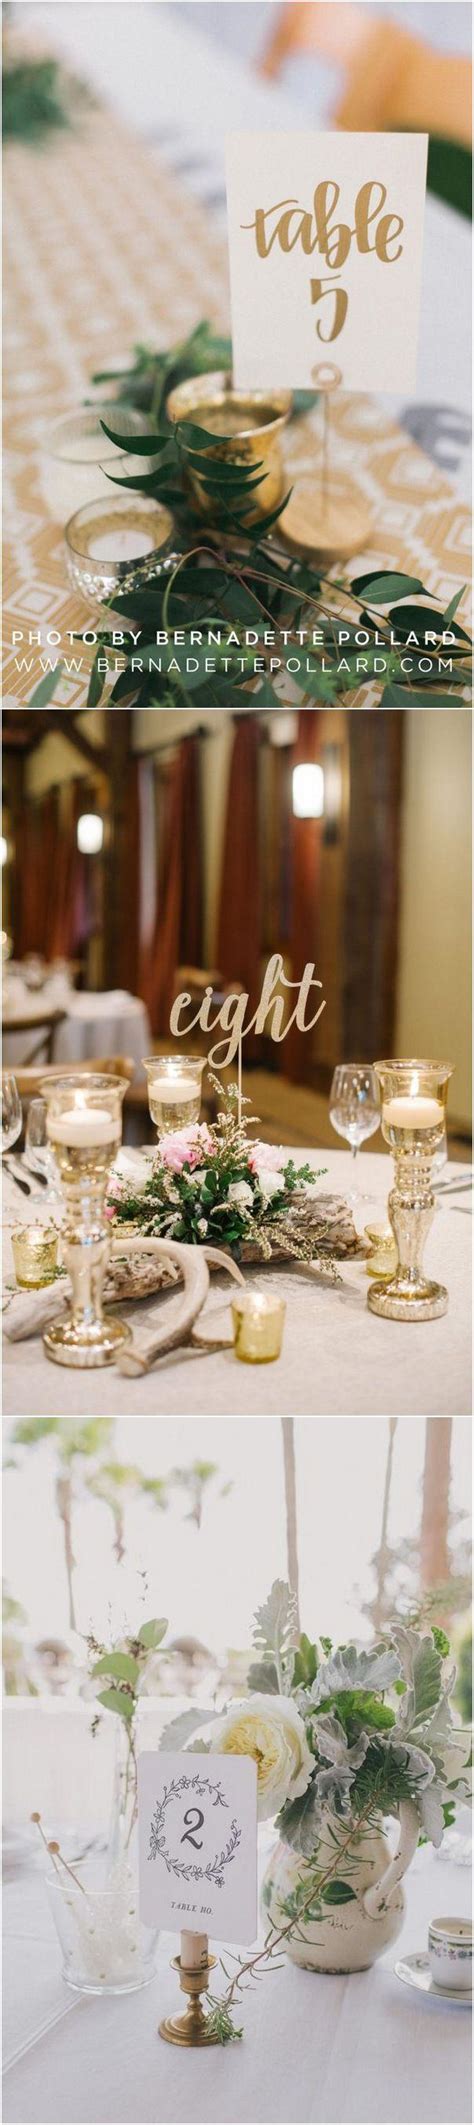 18 Inspiring Wedding Table Number Ideas To Love 2762384 Weddbook